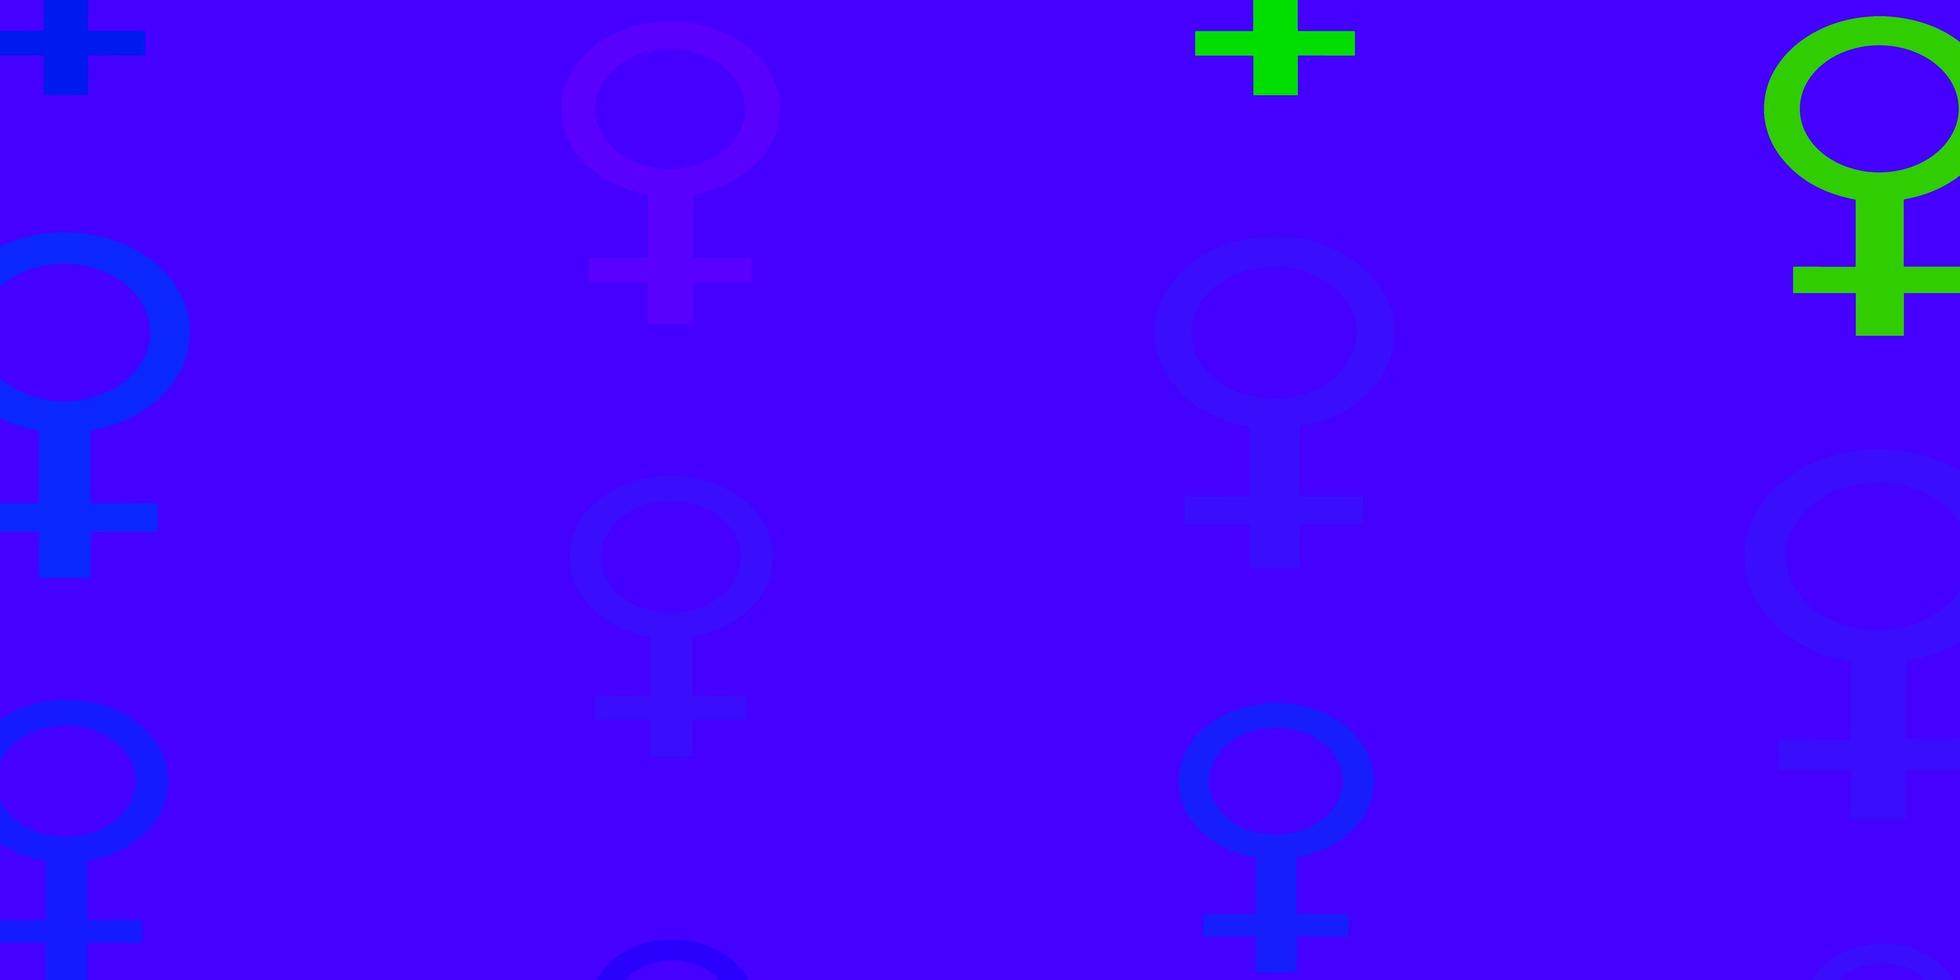 luz de fundo multicolorido de vetor com símbolos de mulher.